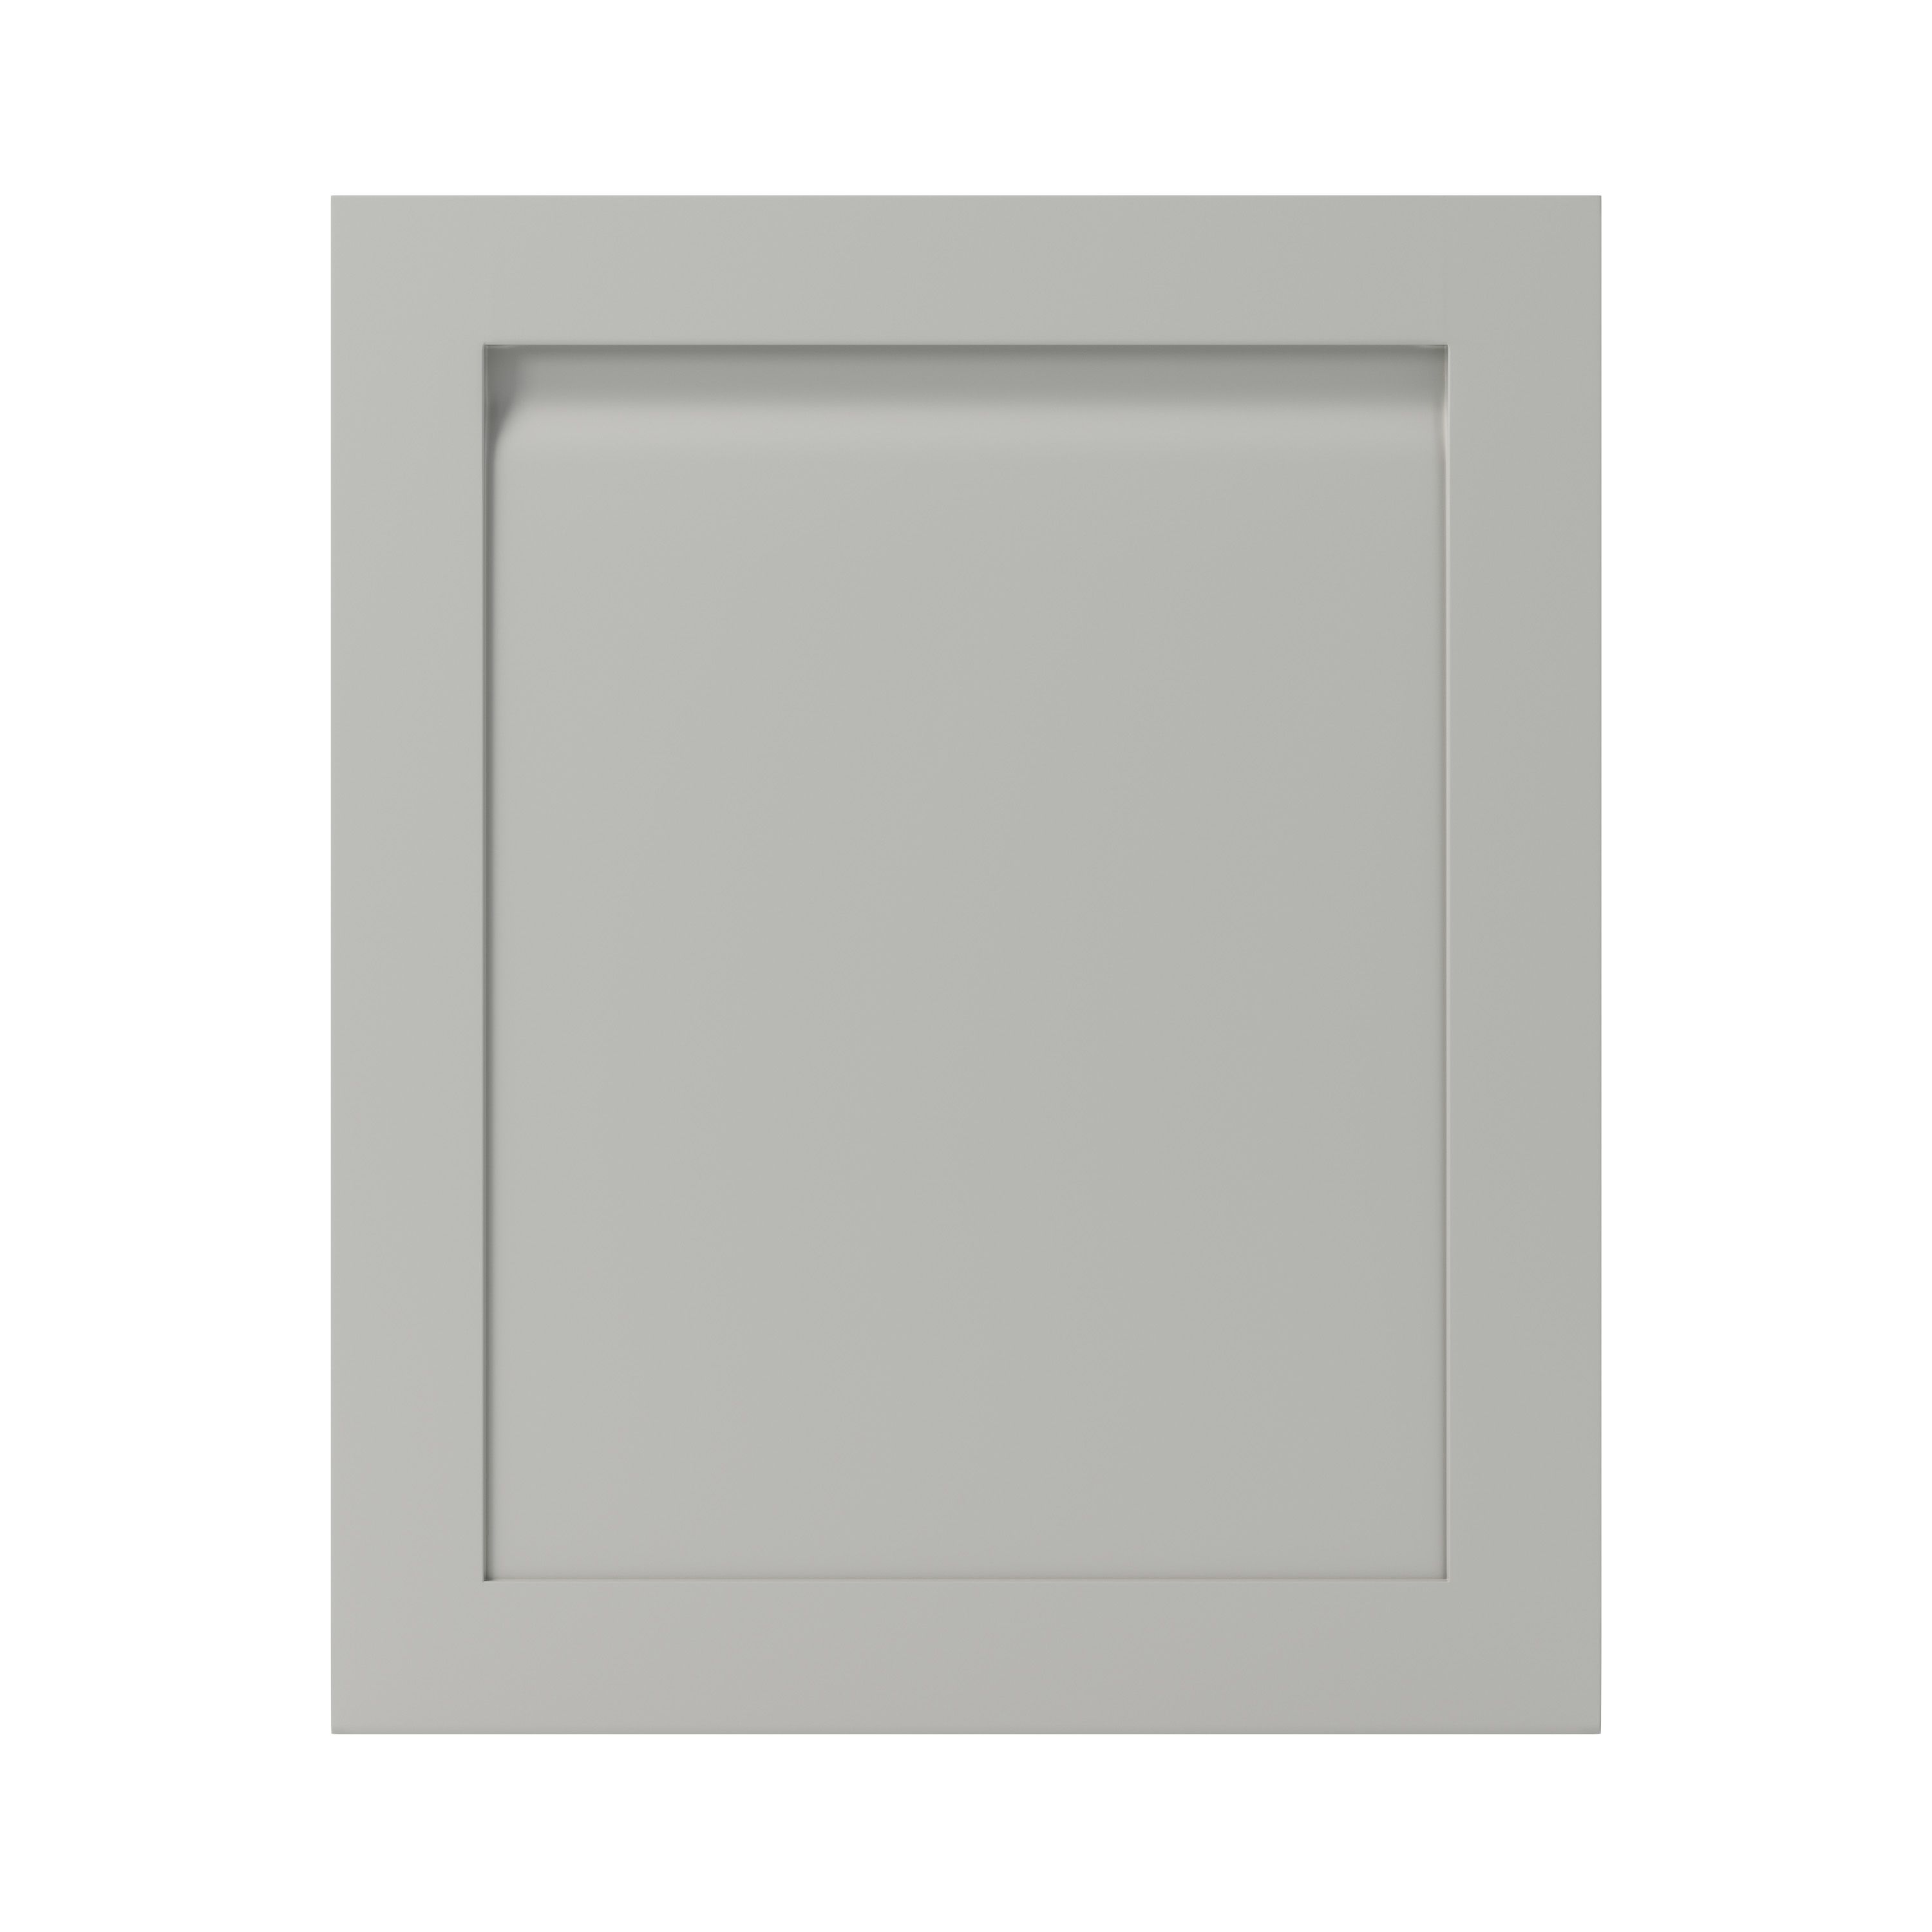 GoodHome Garcinia Matt stone integrated handle shaker Tall appliance Cabinet door (W)600mm (H)723mm (T)20mm